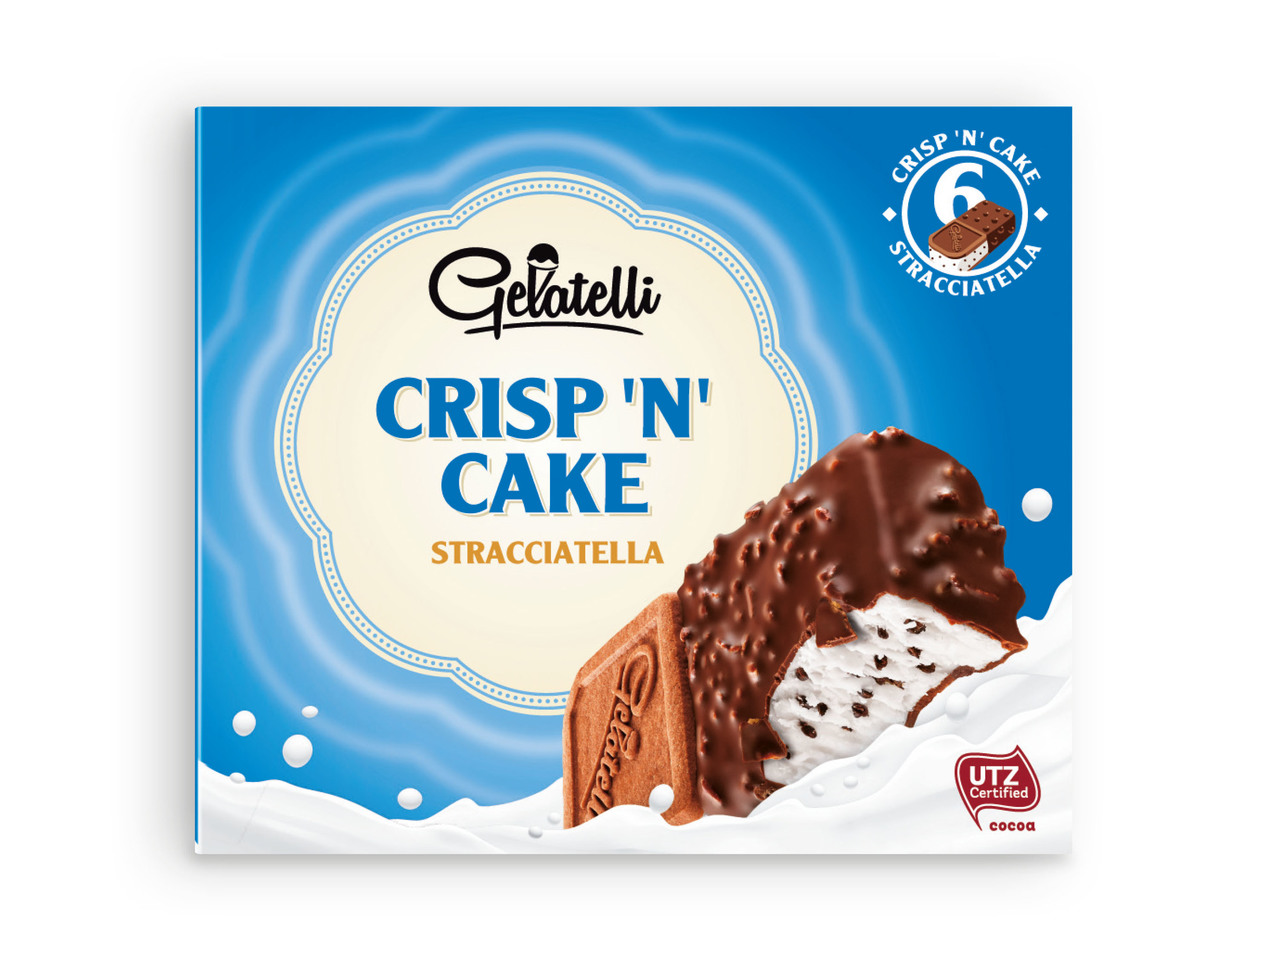 GELATELLI(R) Gelado Crisp ‘N' Cake Stracciatella